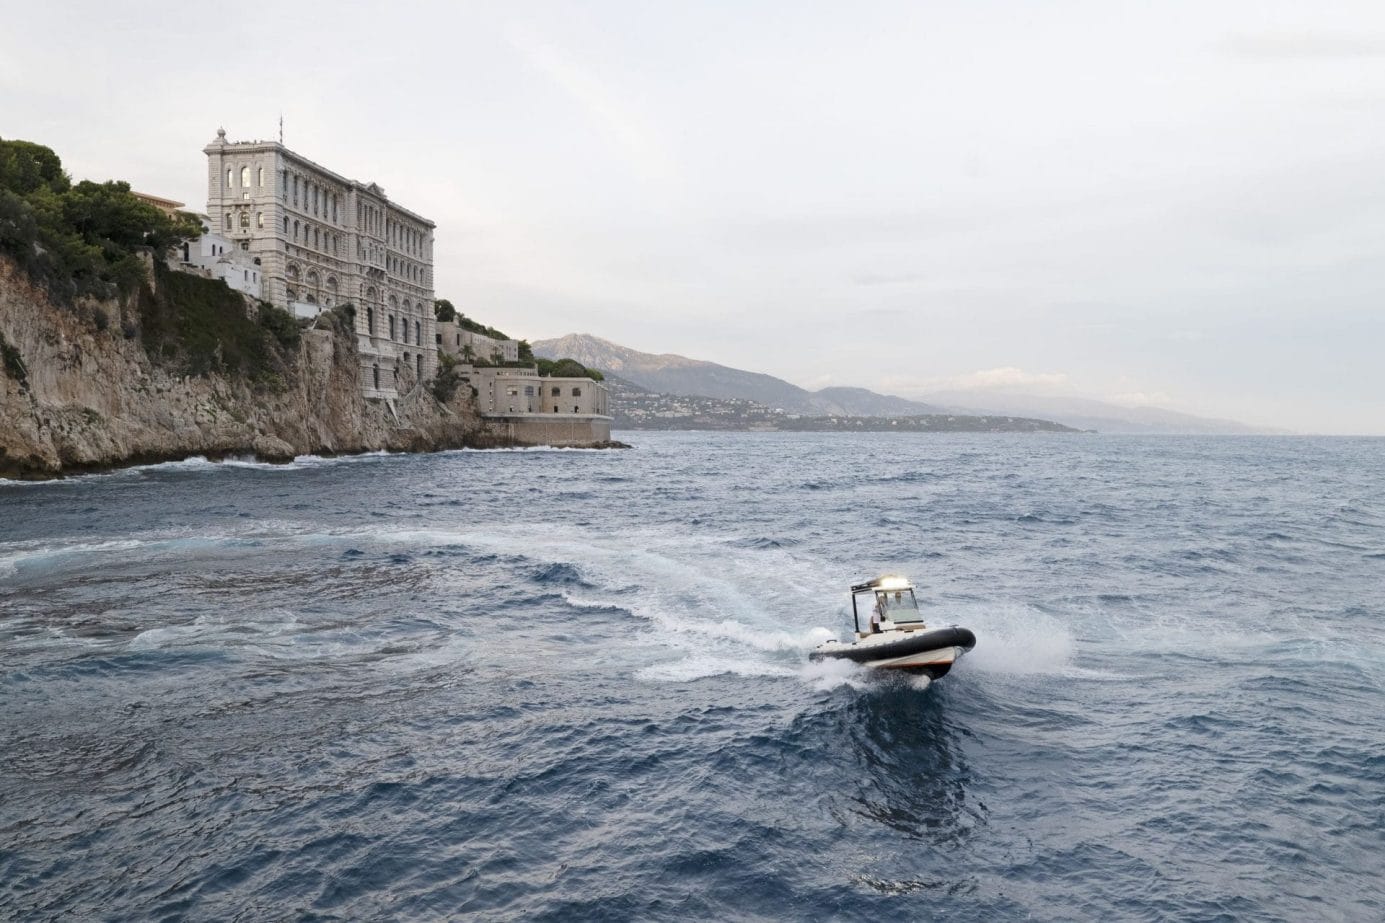 Small boat on the water near Monaco